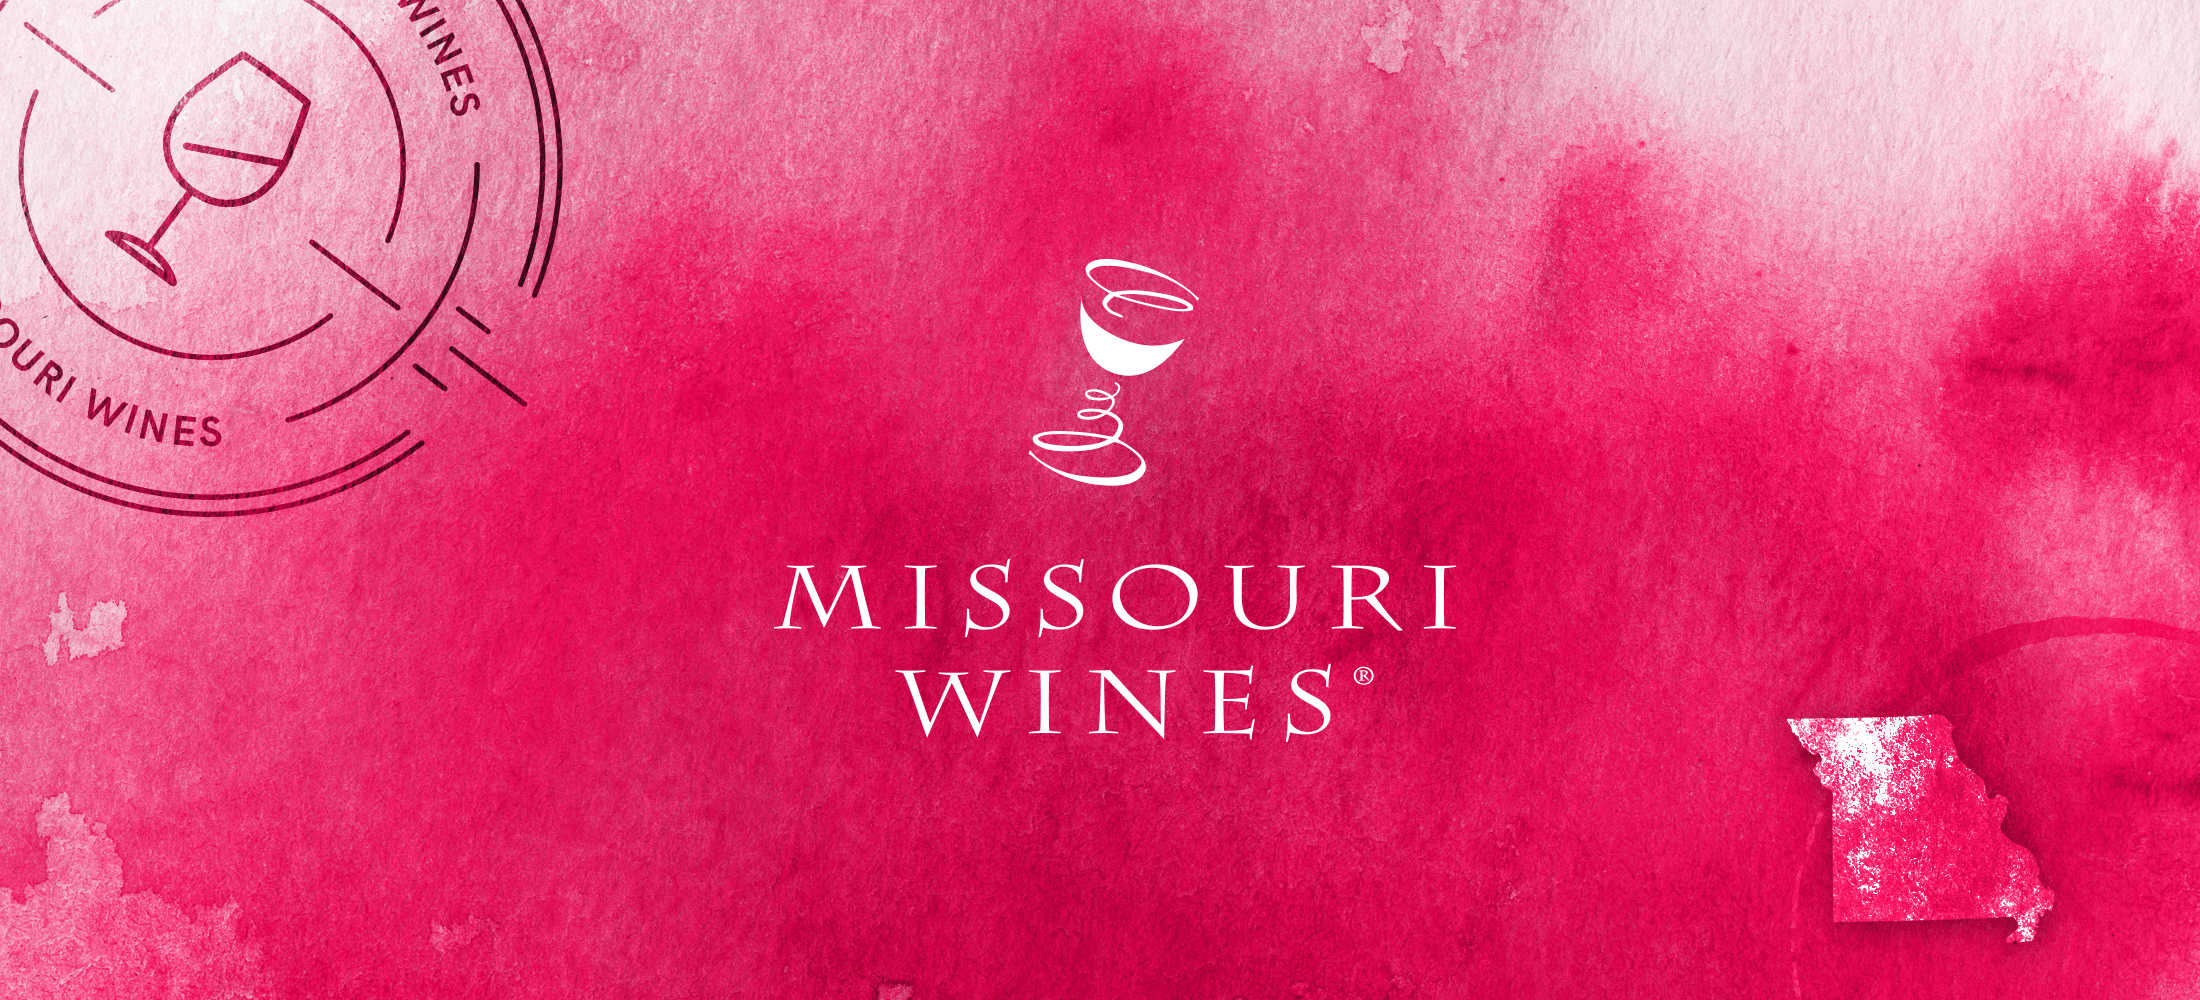 Missouri Wines Feature Image